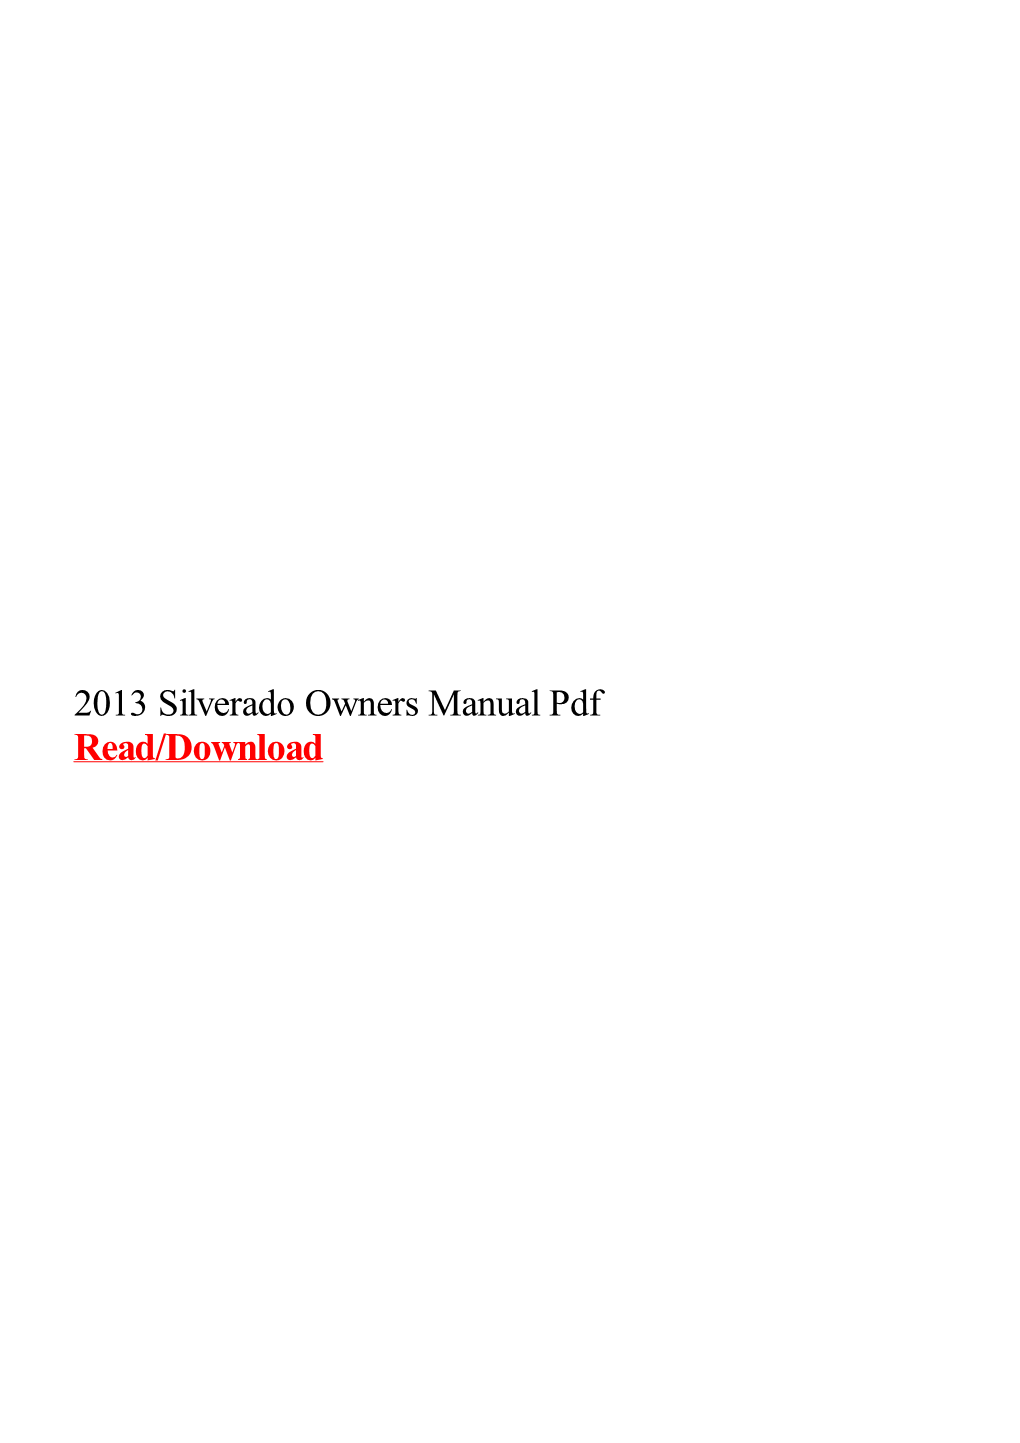 2013 Silverado Owners Manual Pdf.Pdf